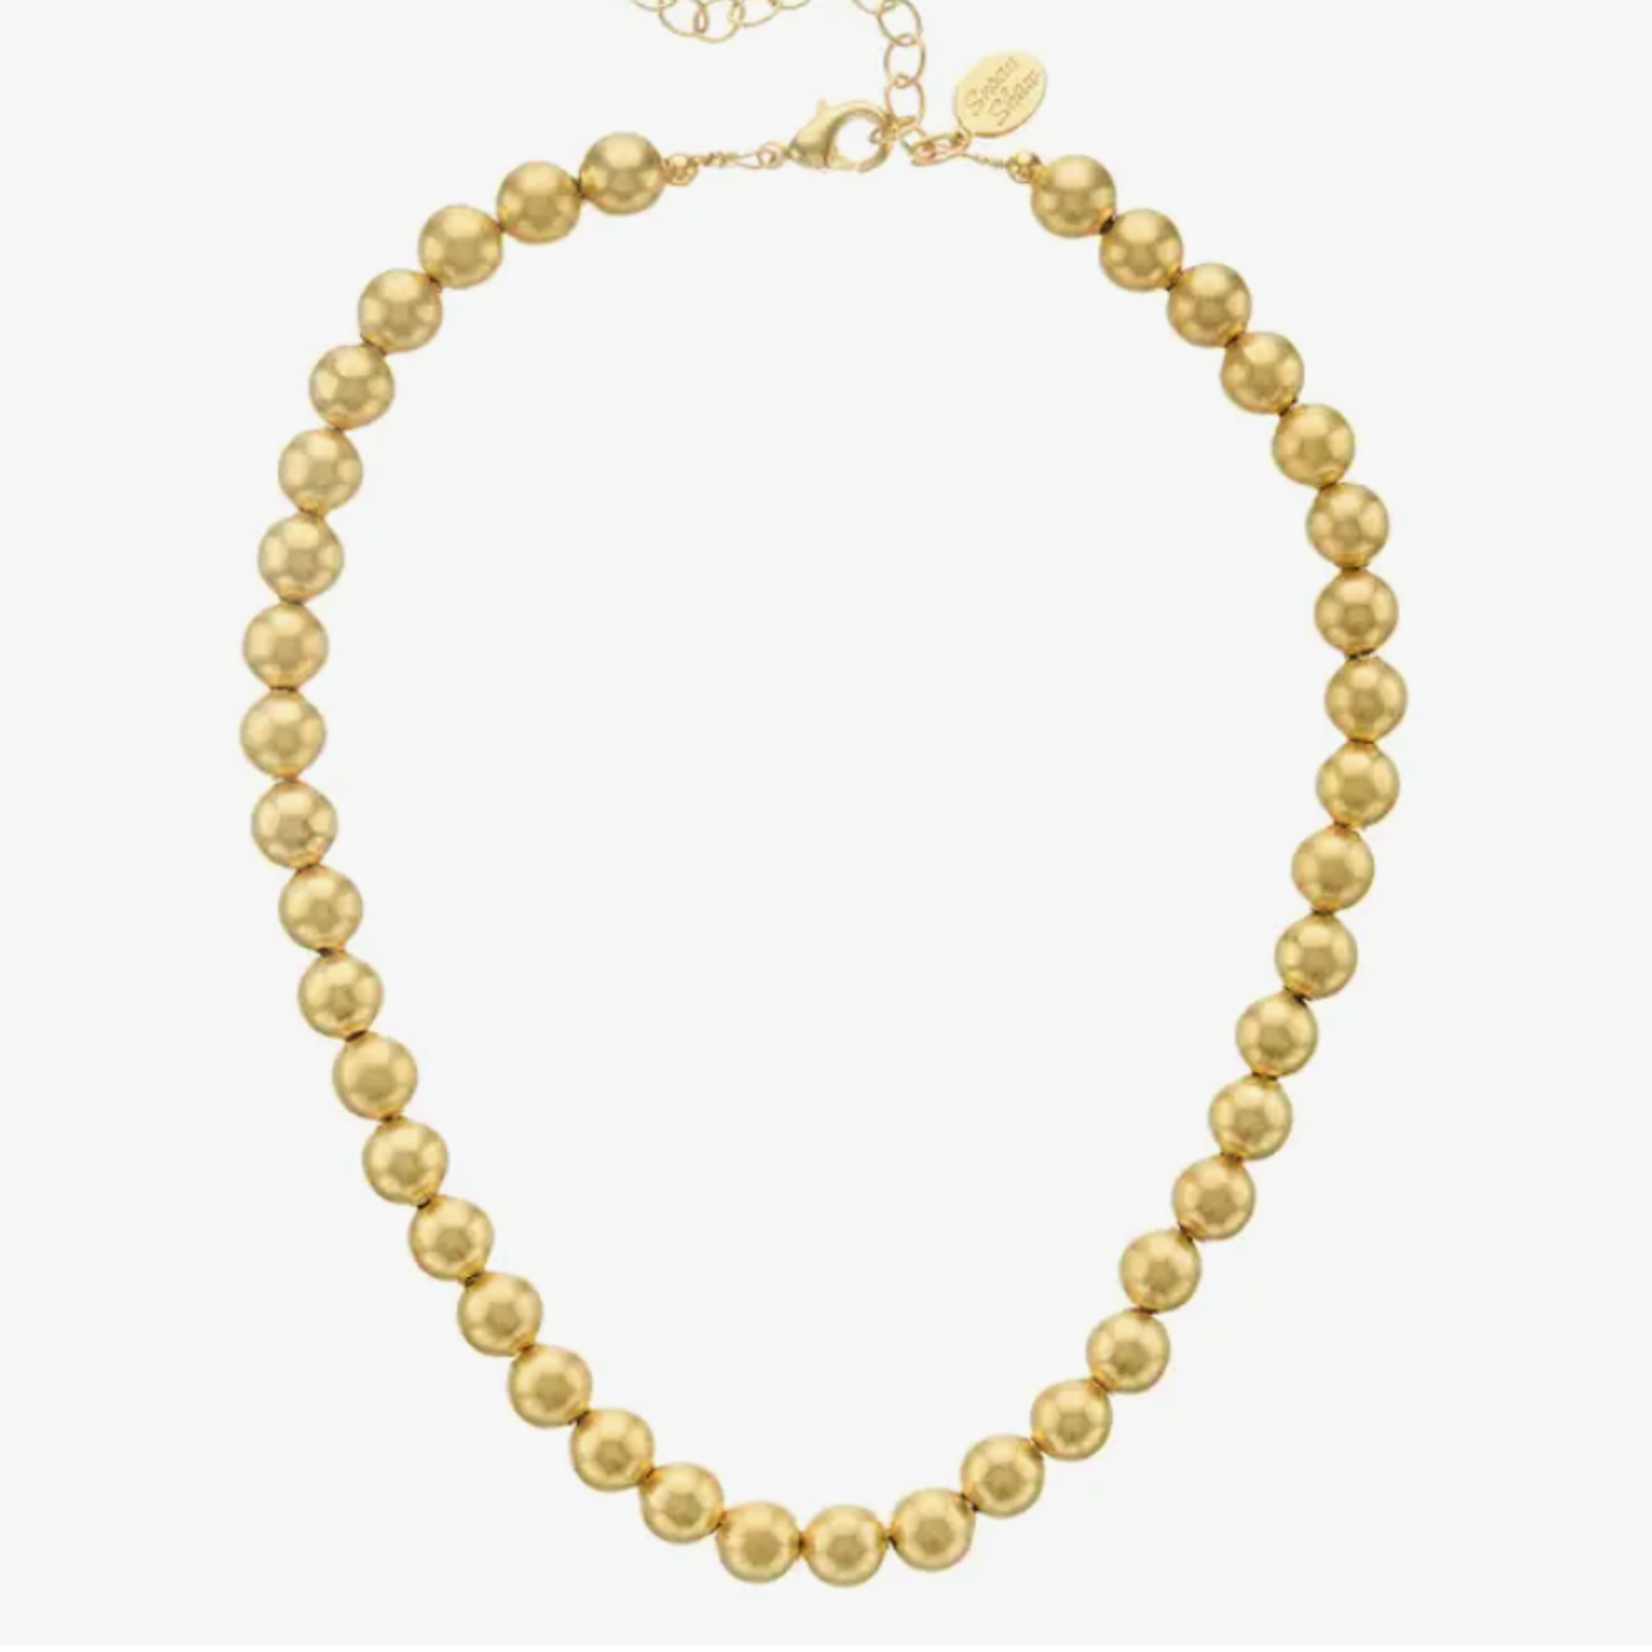 susan shaw Mini Margaret Gold Bead Necklace